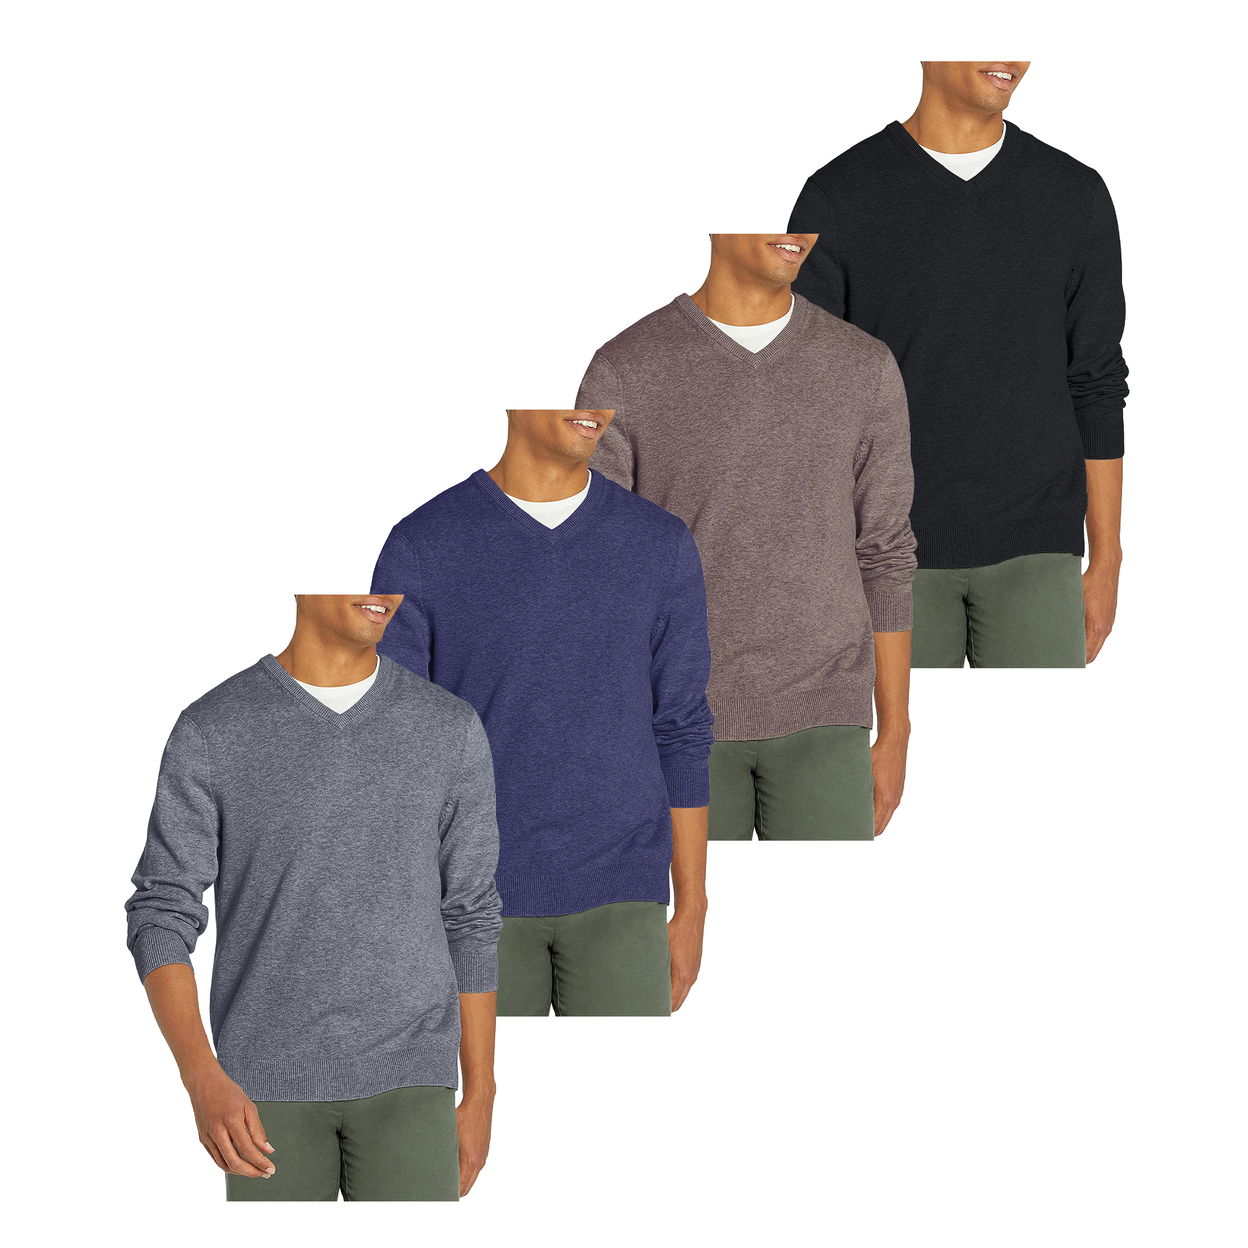 2-Pack: Men's Casual Ultra Soft Slim Fit Warm Knit V-Neck Sweater - Black & Blue, X-large